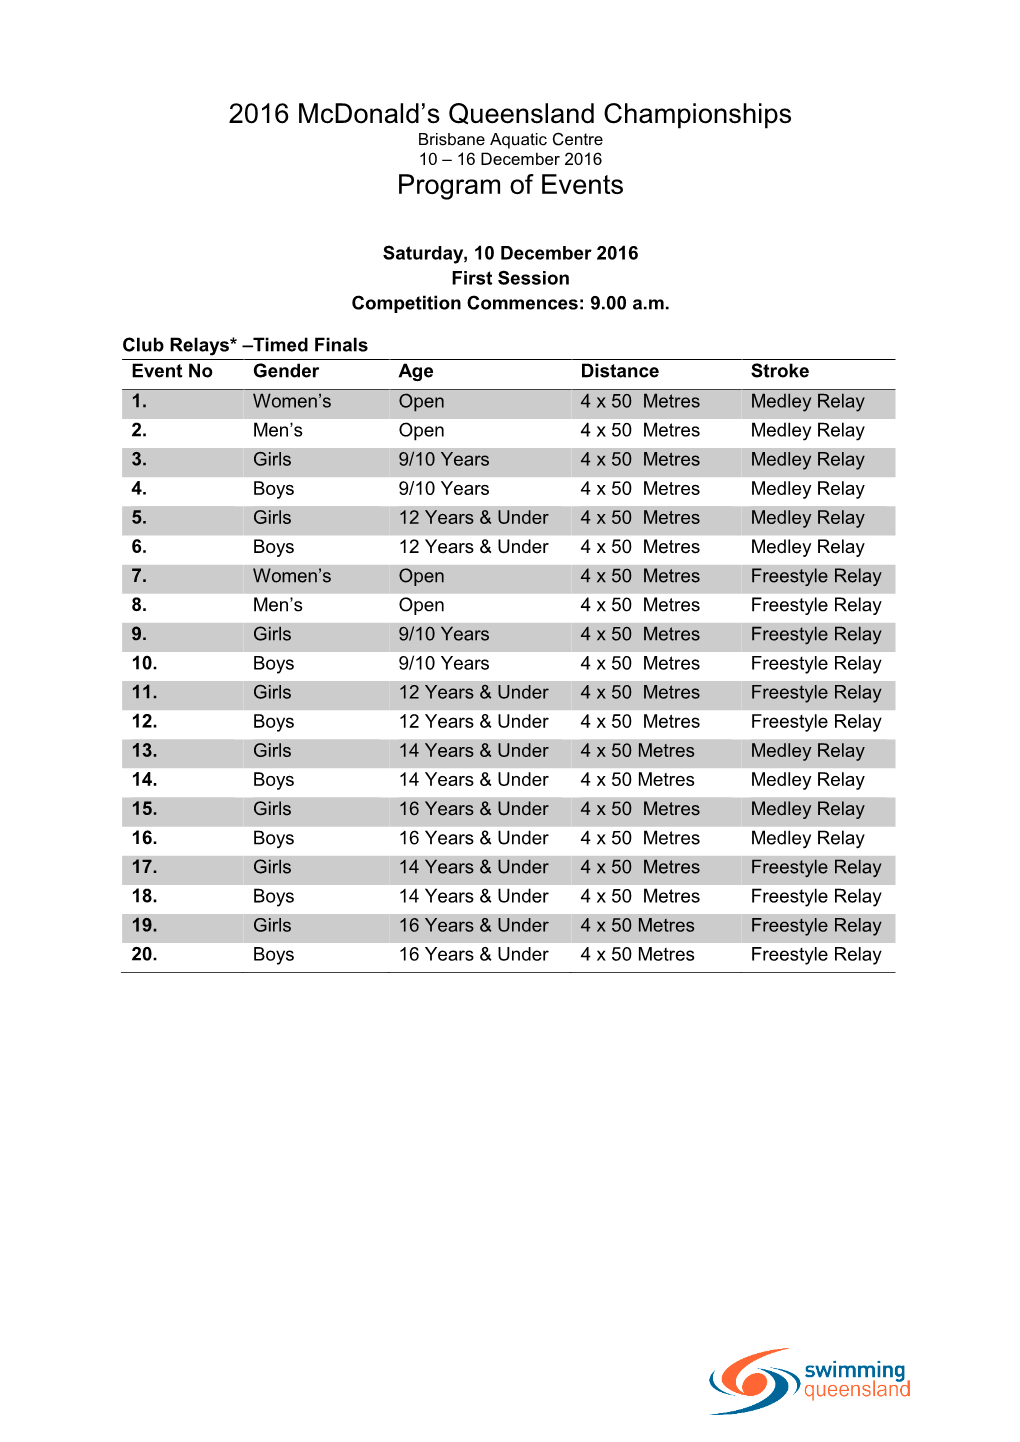 2016 Mcdonald's Queensland Championships Program of Events